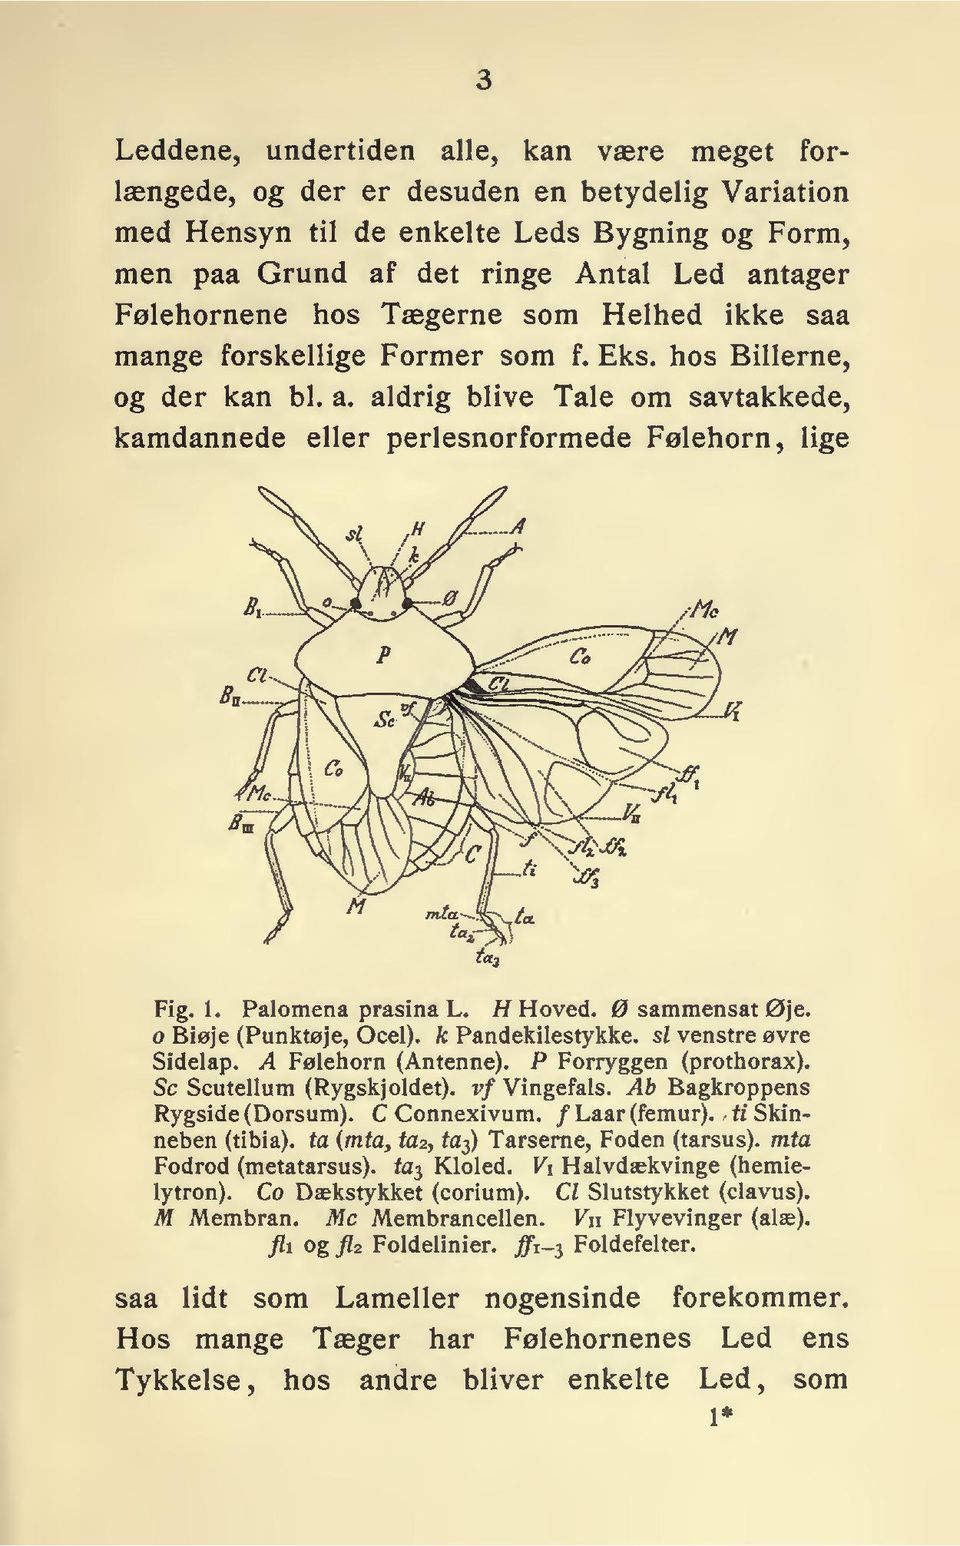 Palomena prasina L. H Hoved. sammensat Øje. o Biøje (Punktøje, Ocel), k Pandekilestykke. si venstre øvre Sidelap. A Følehorn (Antenne). P Forryggen (prothorax).